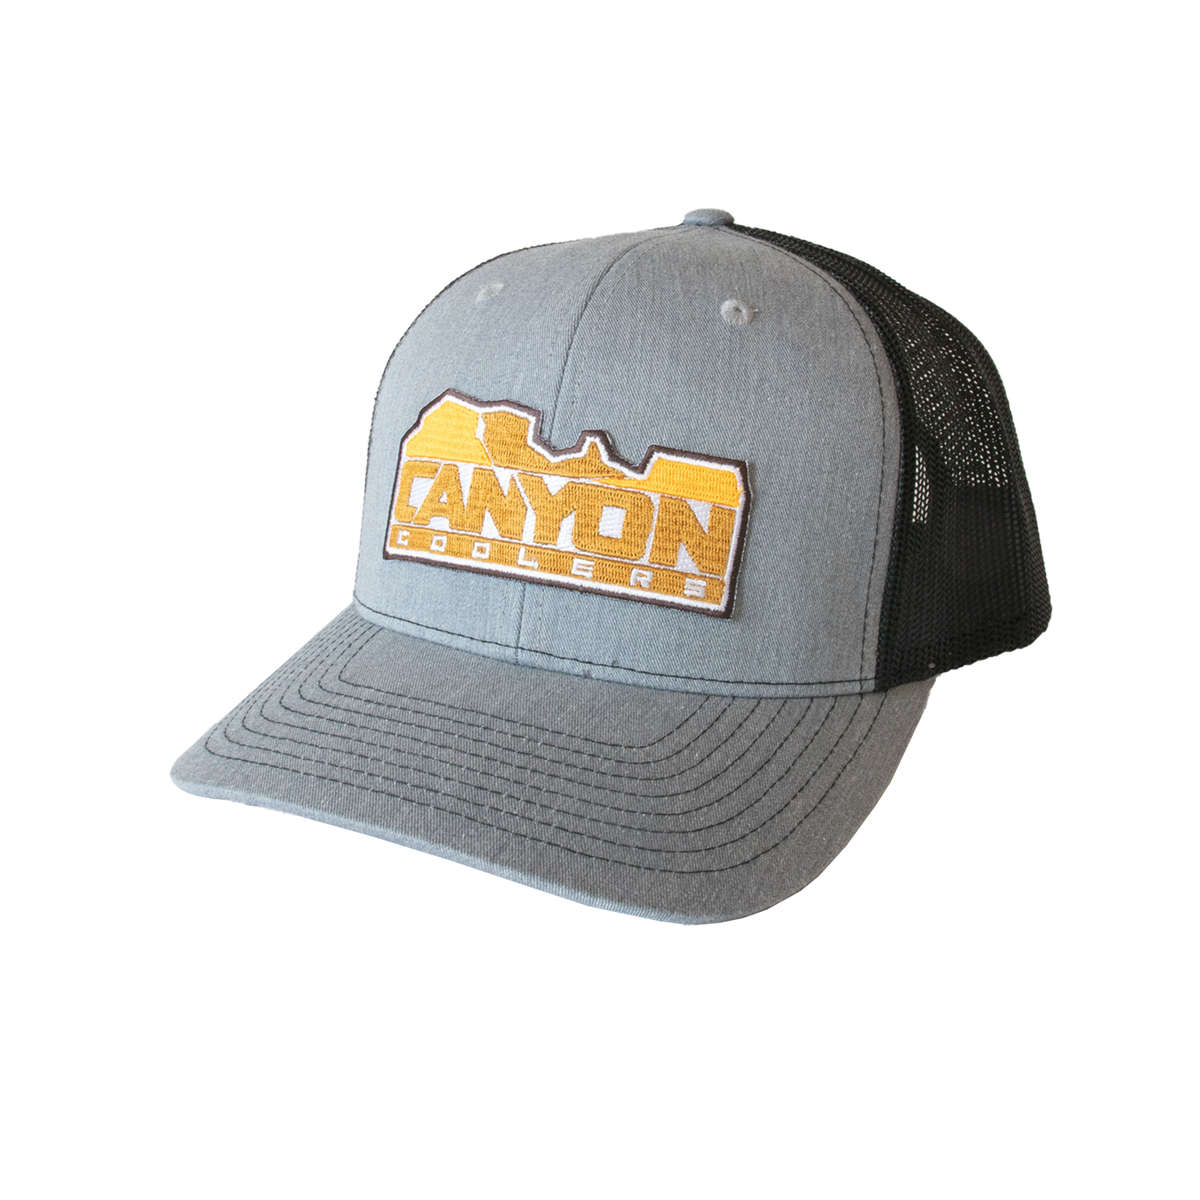 heather gray logo cap